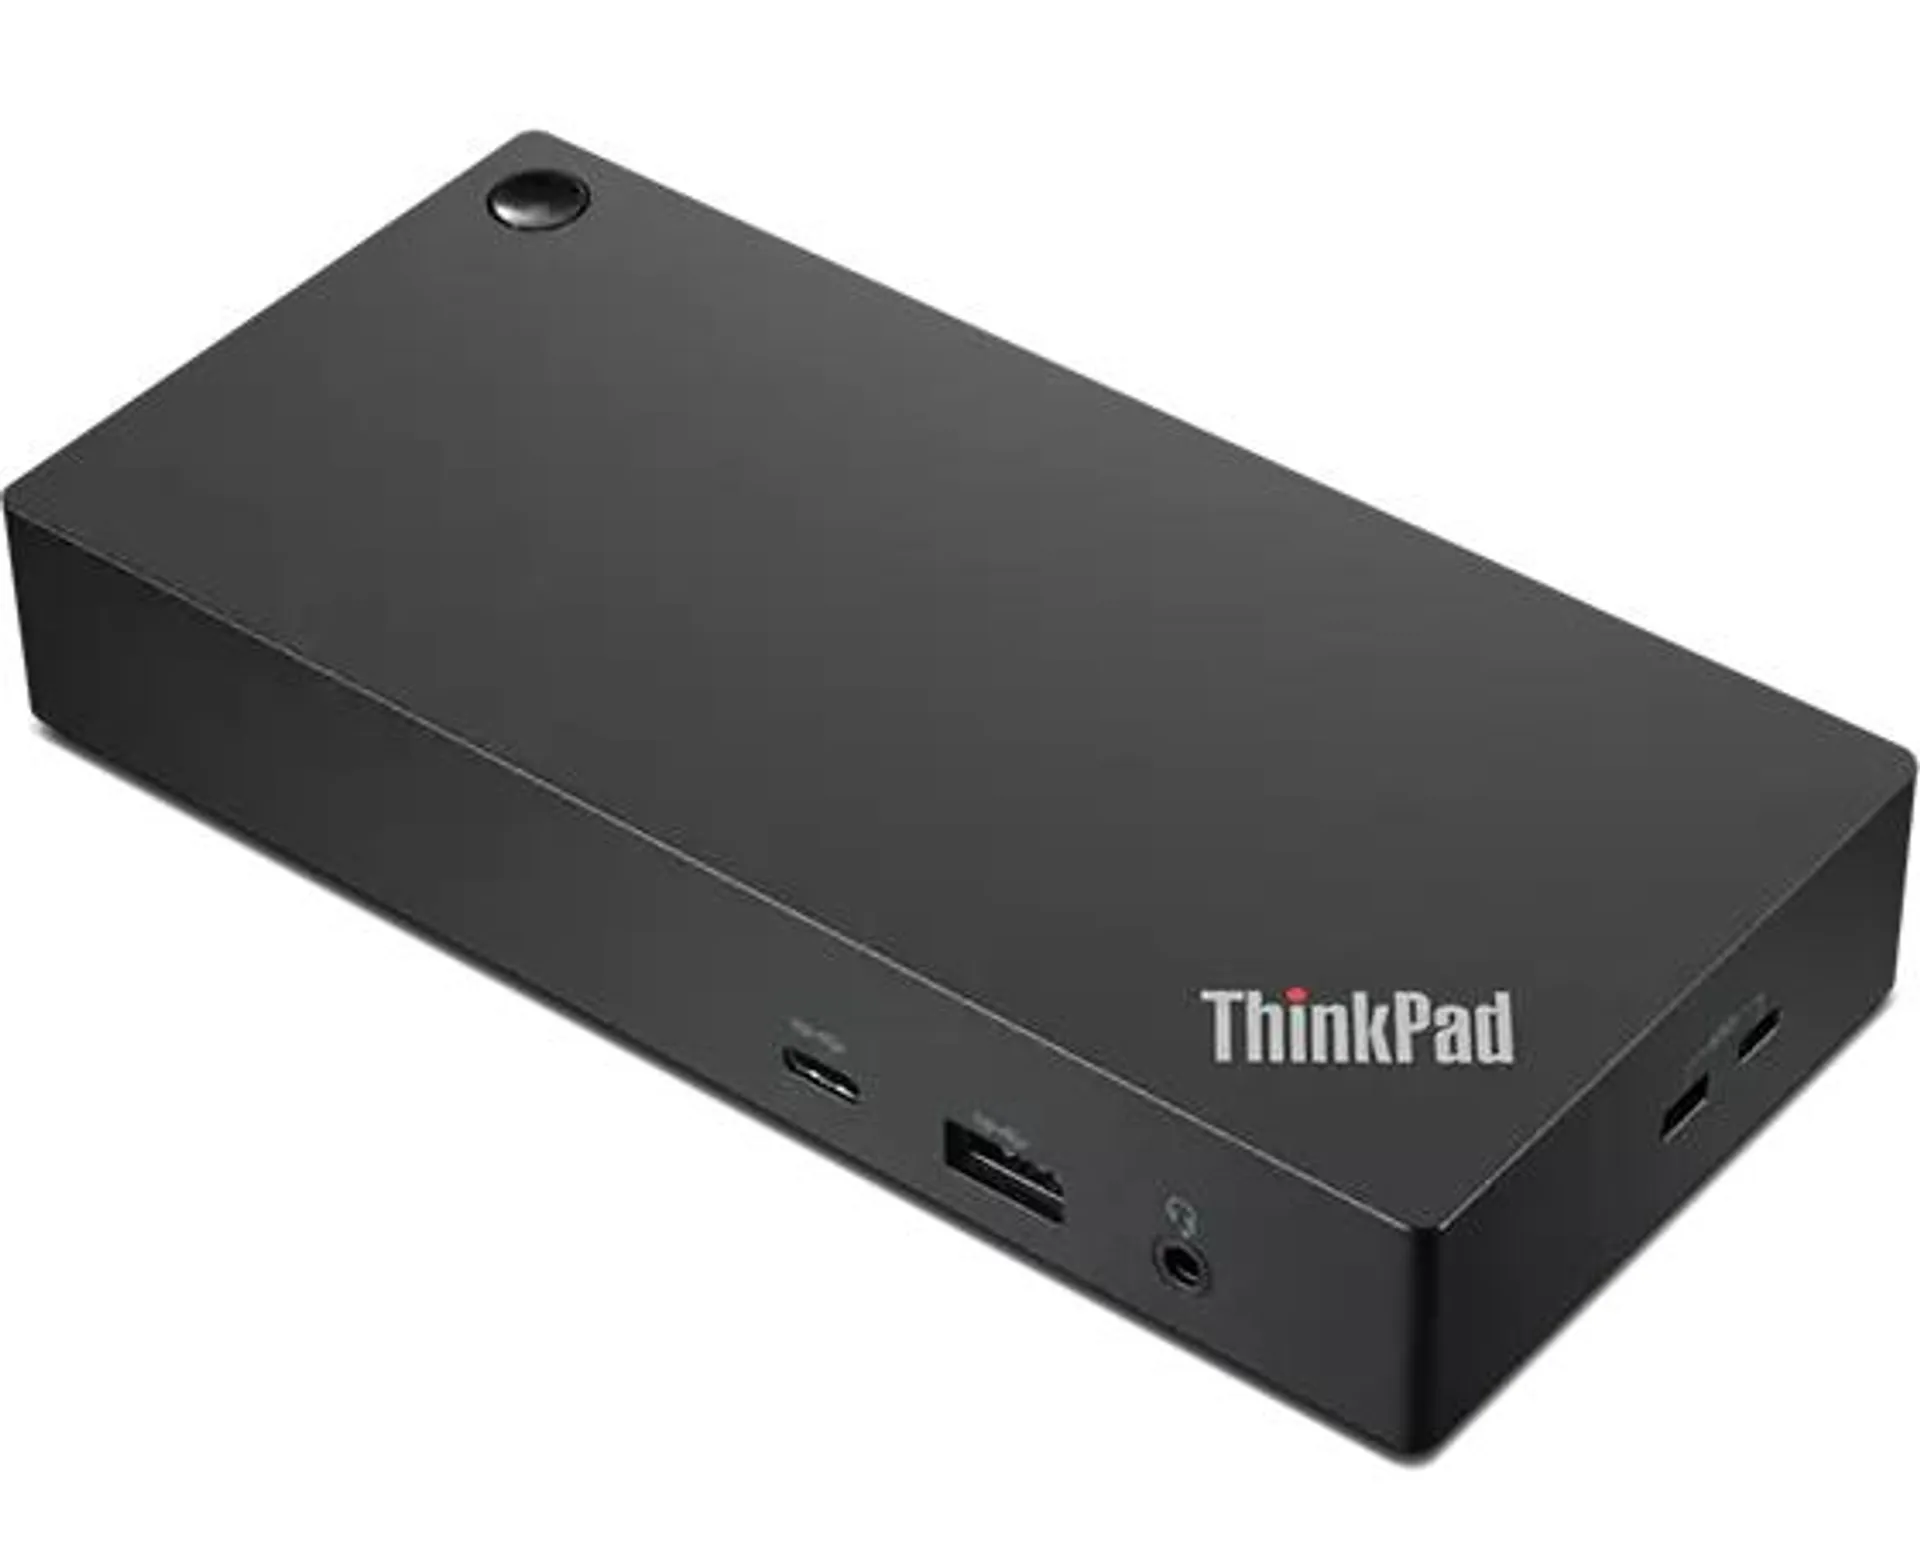 ThinkPad Universal USB-C Dock